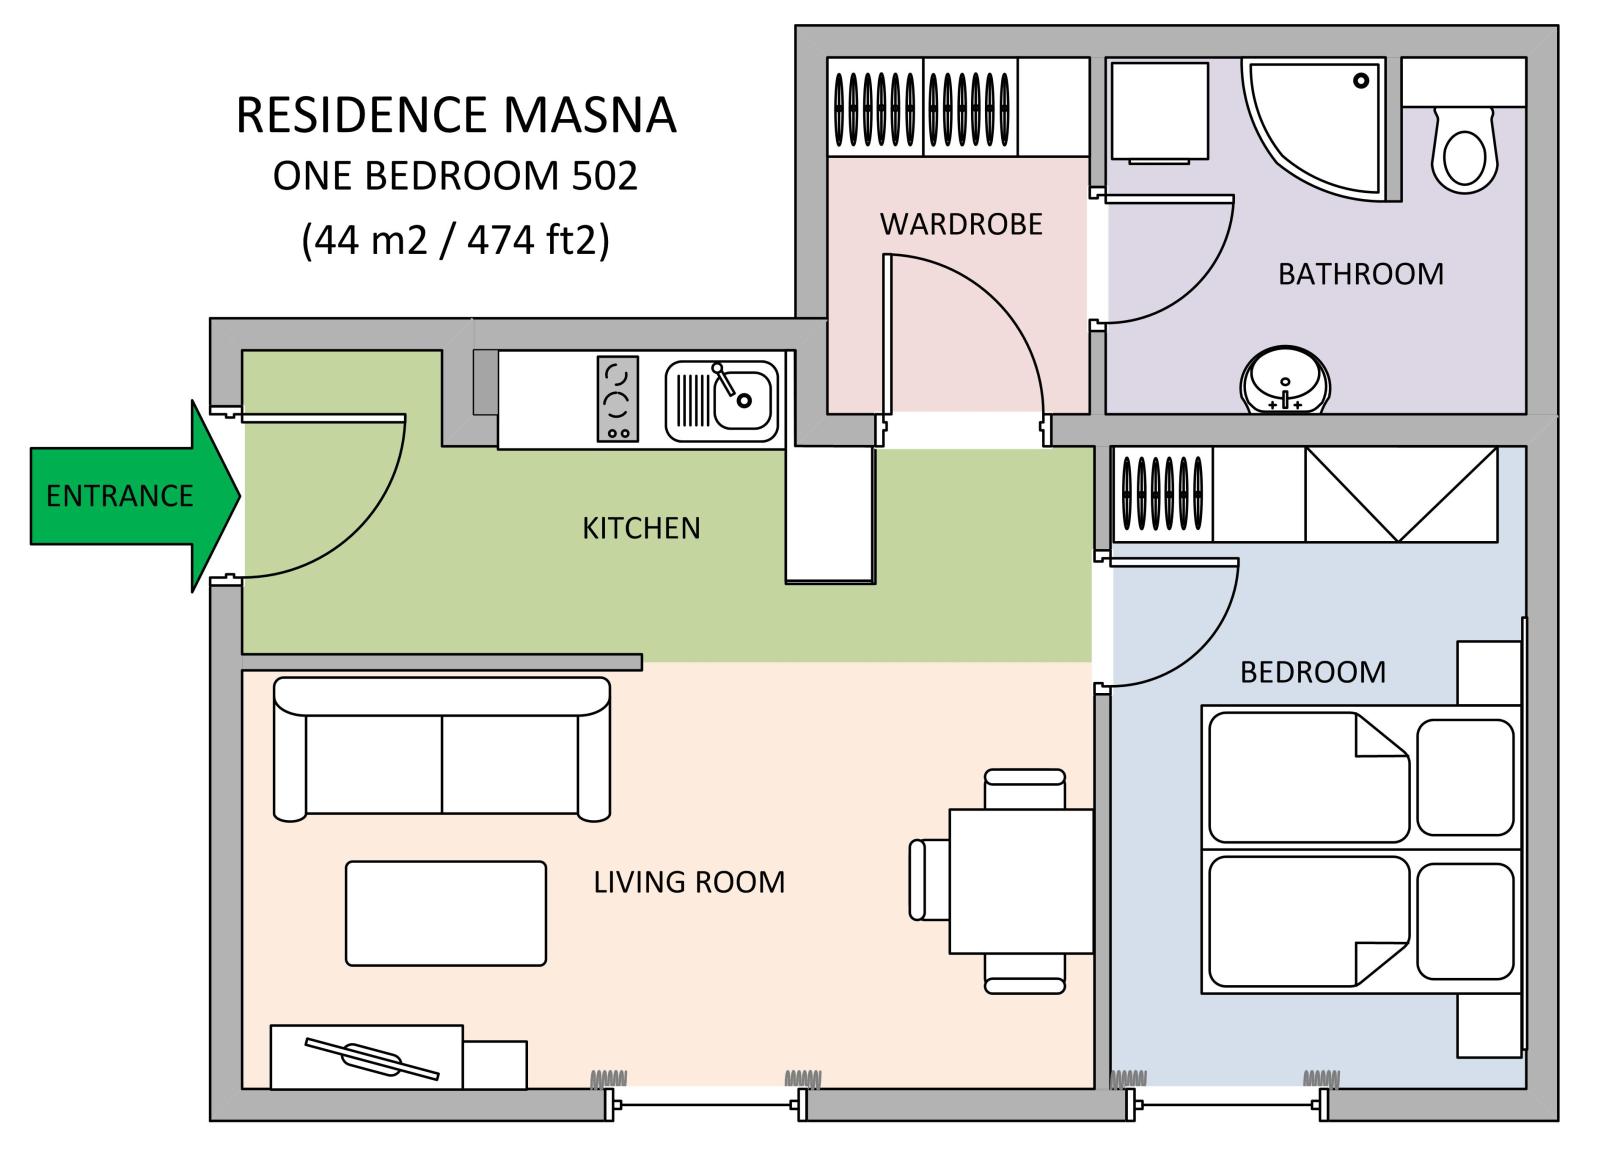 Floorplan of apartment 502 in Residence Masna in Prague